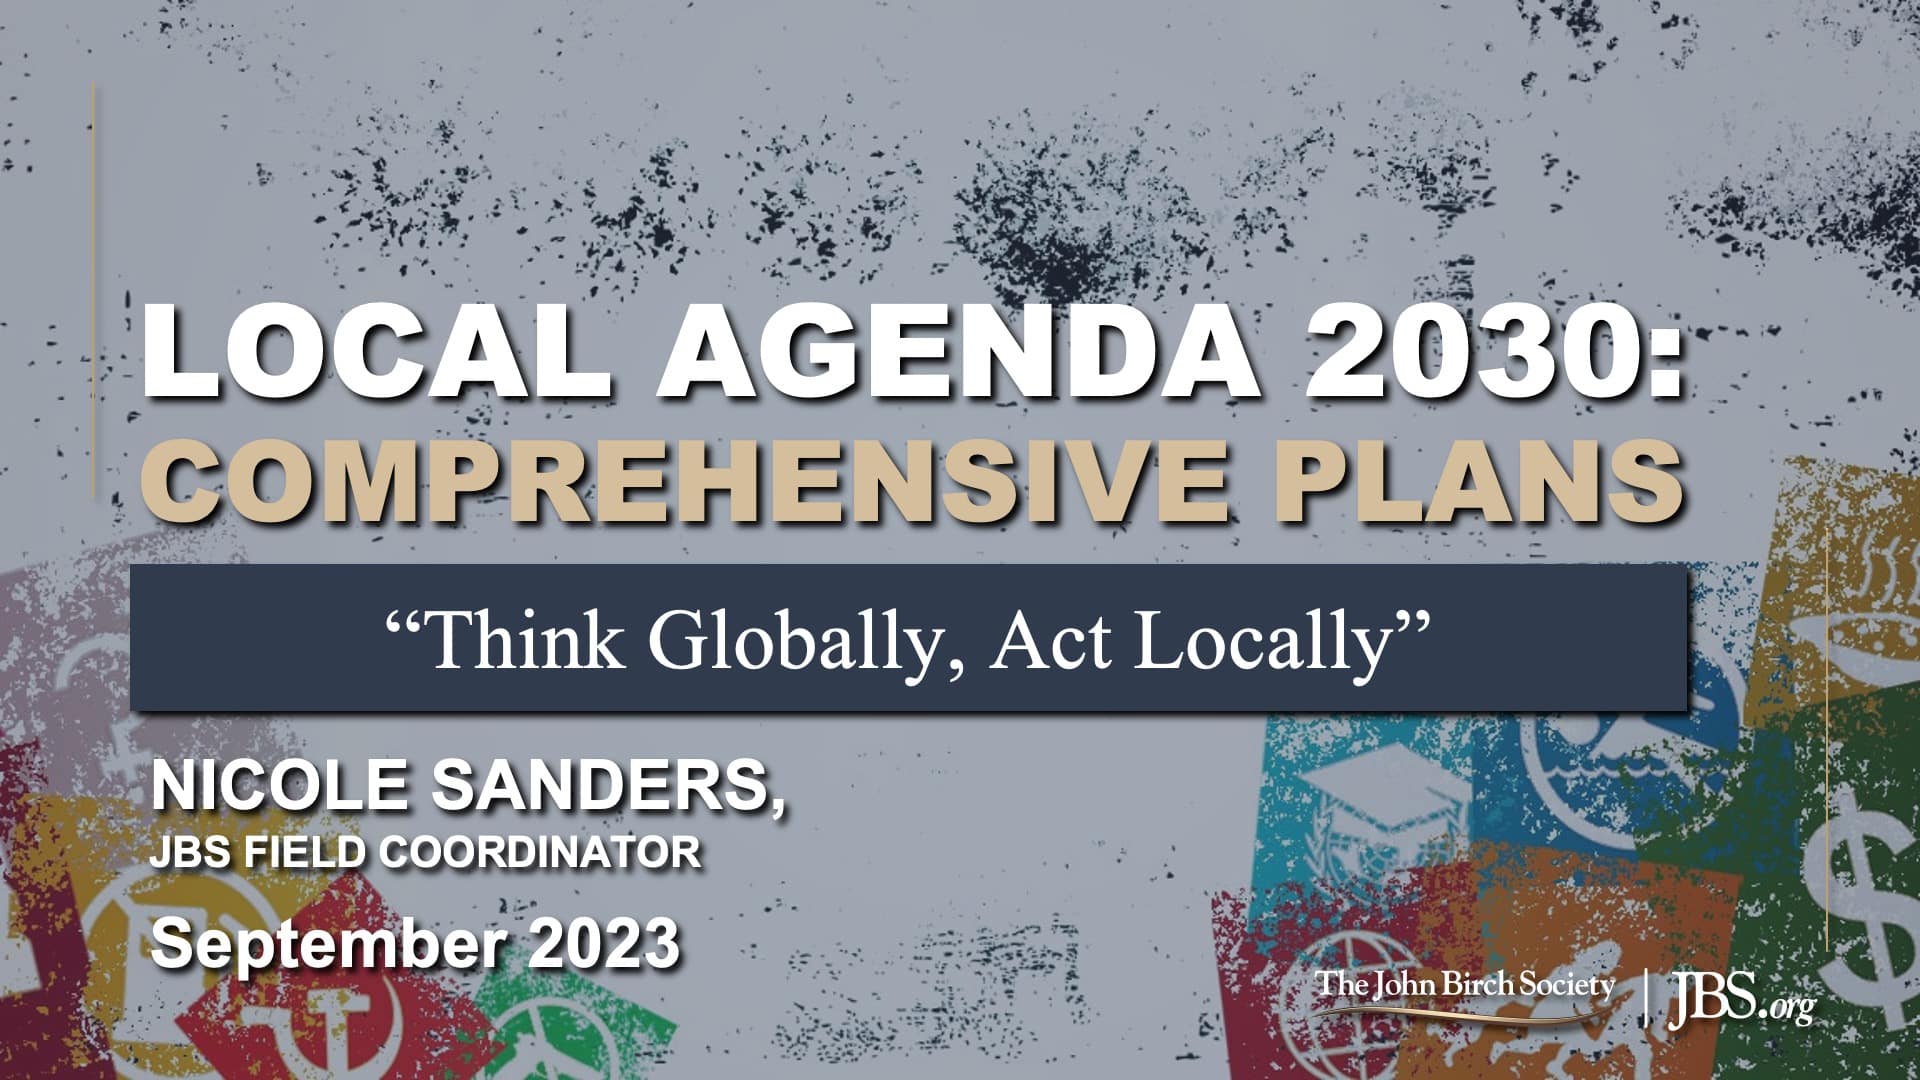 Fighting Agenda 2030 Locally